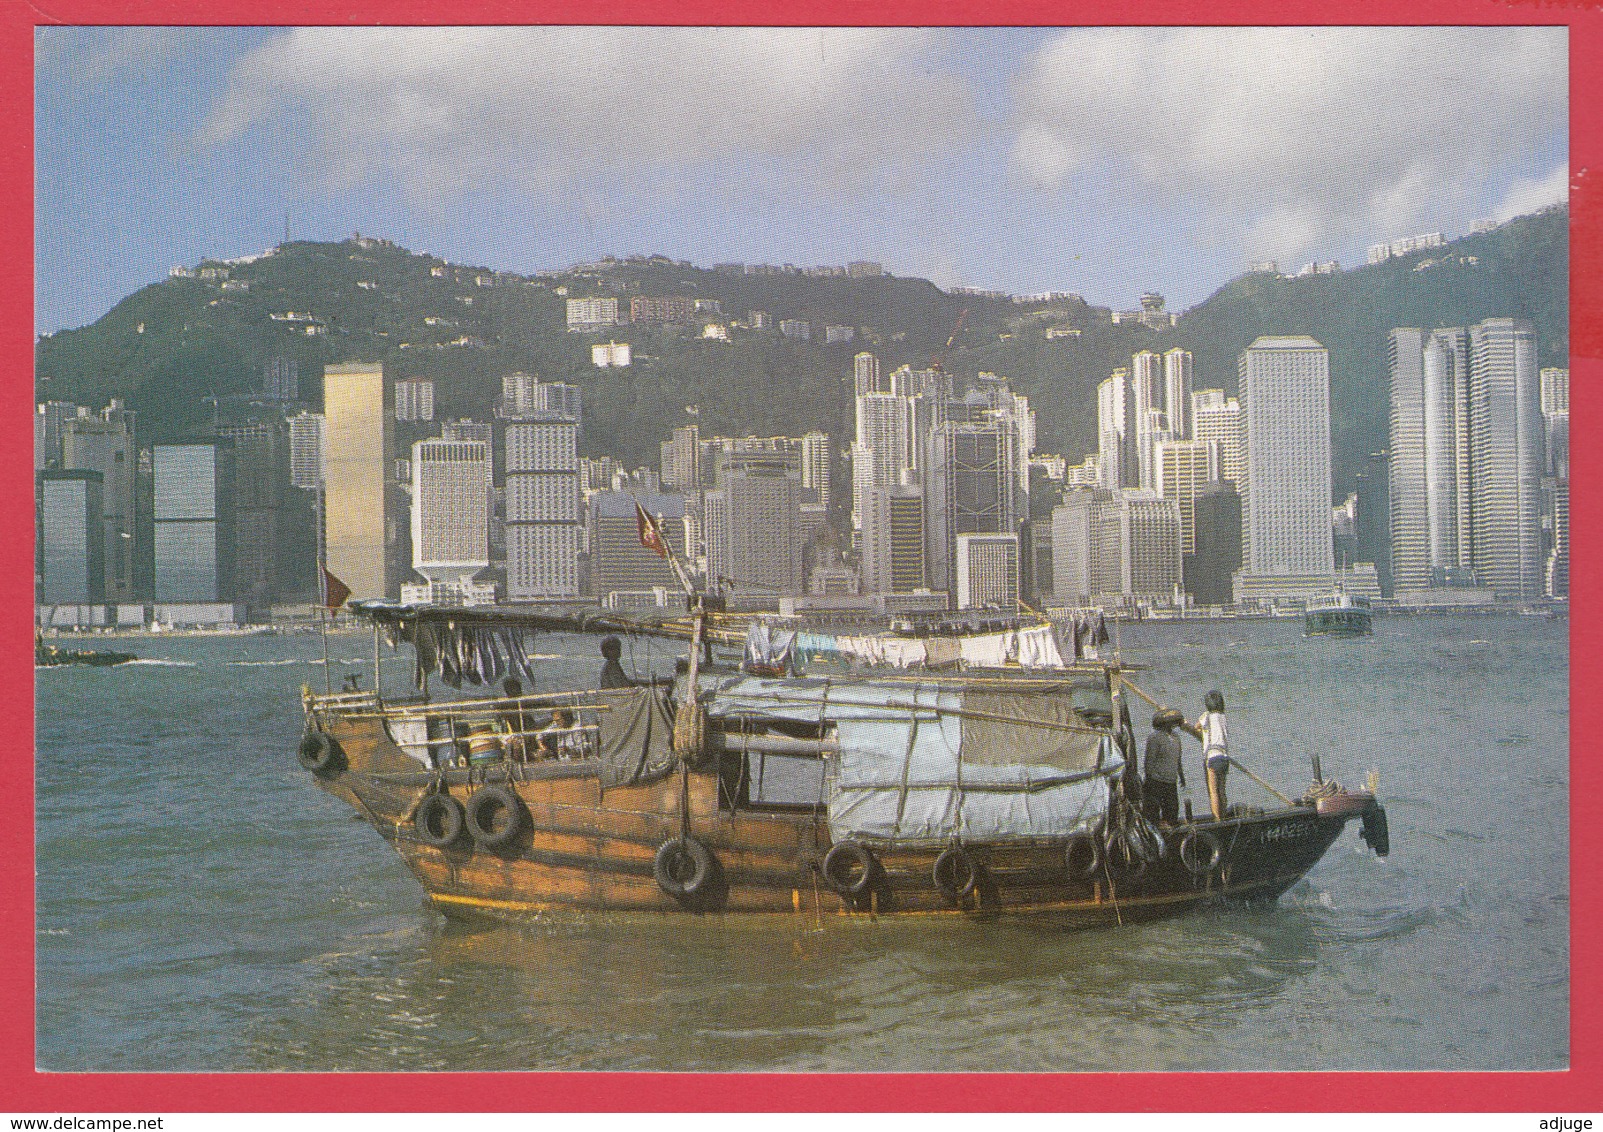 HONG KONG -HARBOUR- Le Port Vue Générale* SUP * 2 SCAN- - Chine (Hong Kong)